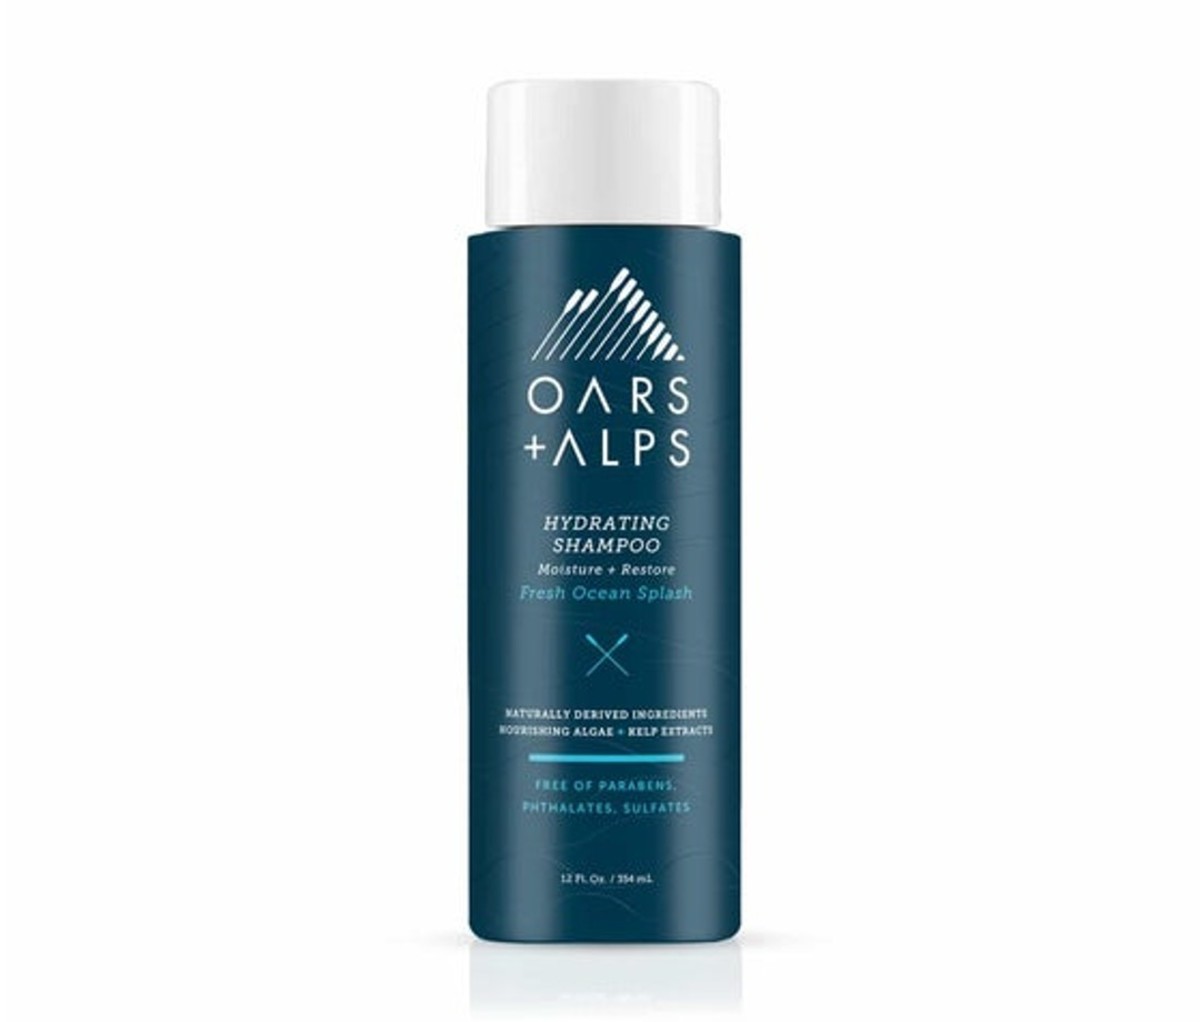 Oars + Alps Hydrating Shampoo